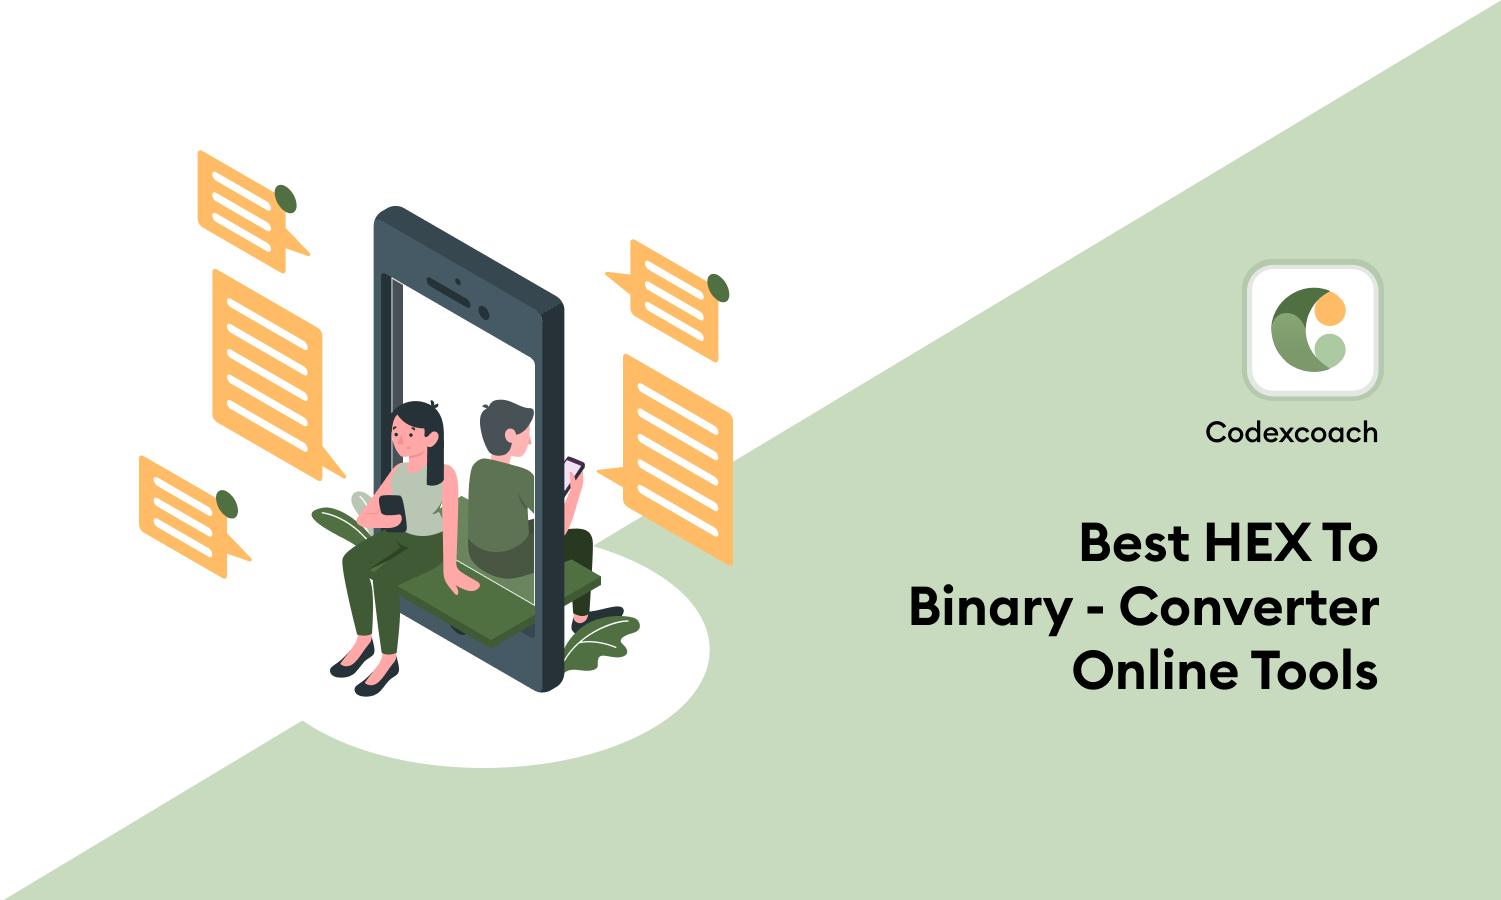 Best HEX To Binary - Converter Online Tools